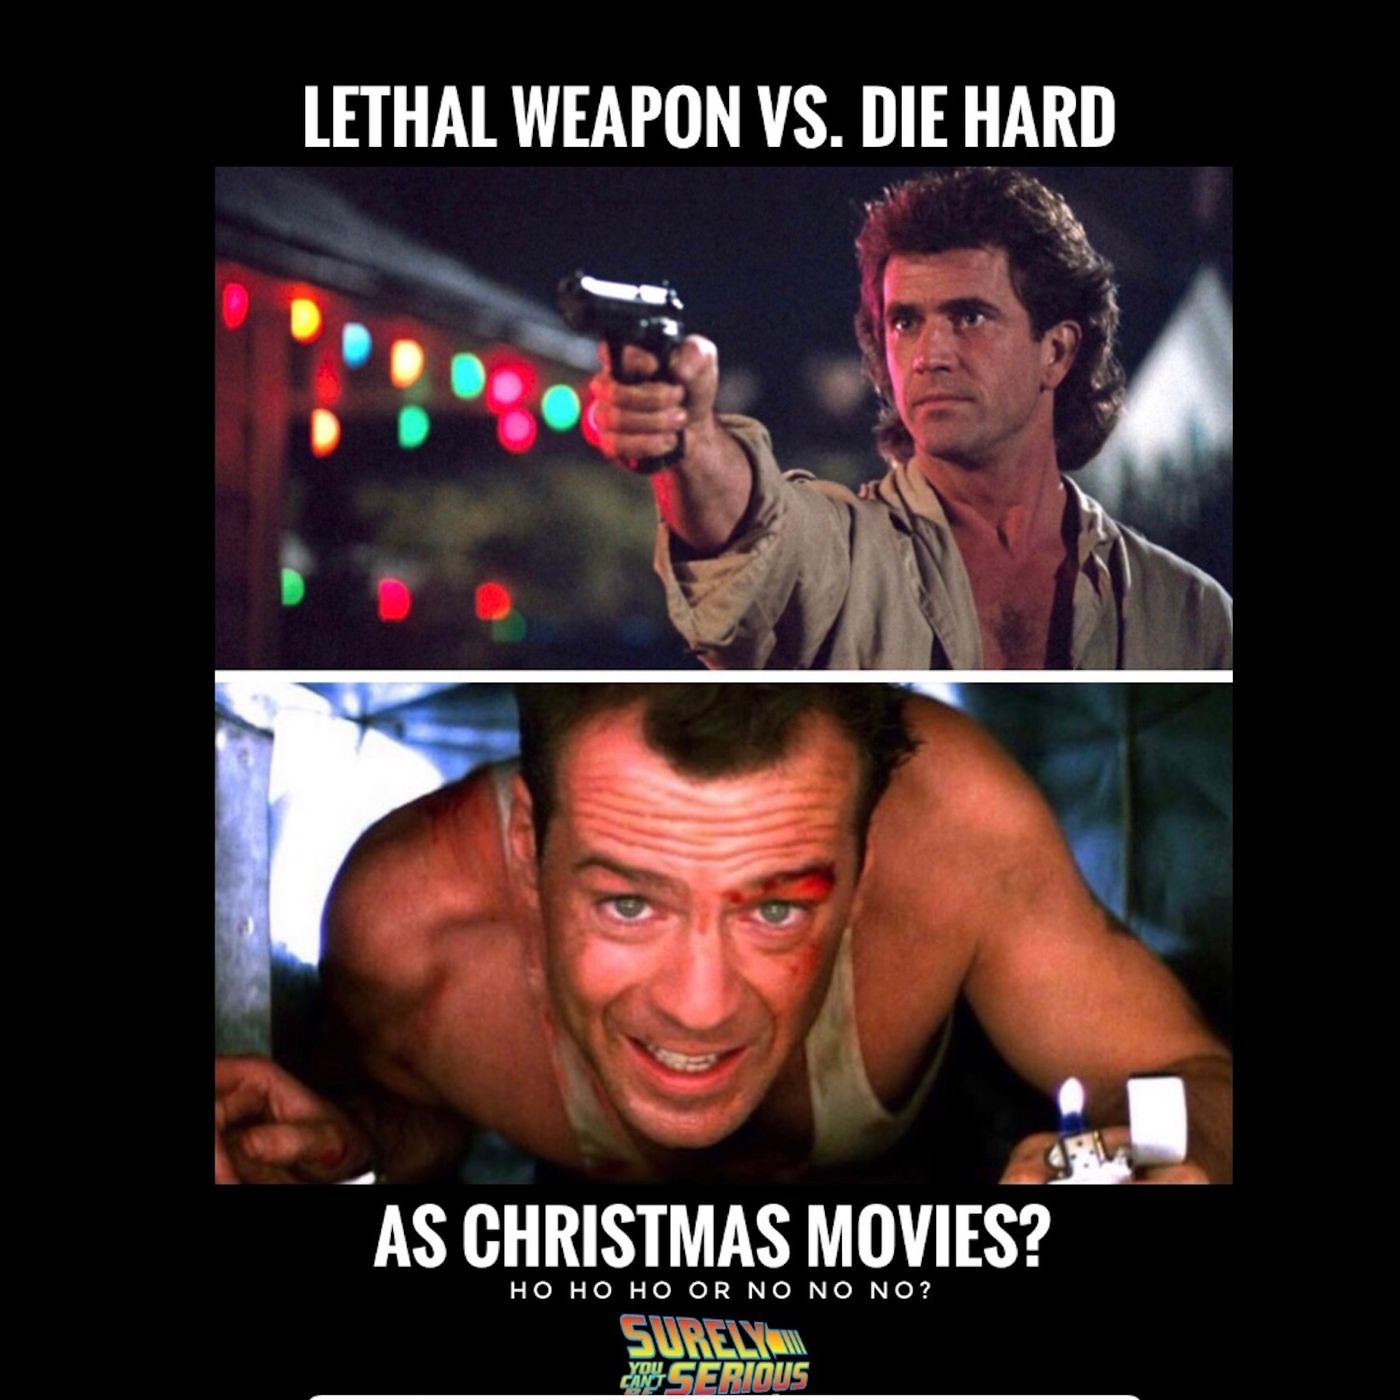 Lethal Weapon (1987) vs. Die Hard (1988) (Pt 3) Christmas Movies? Image